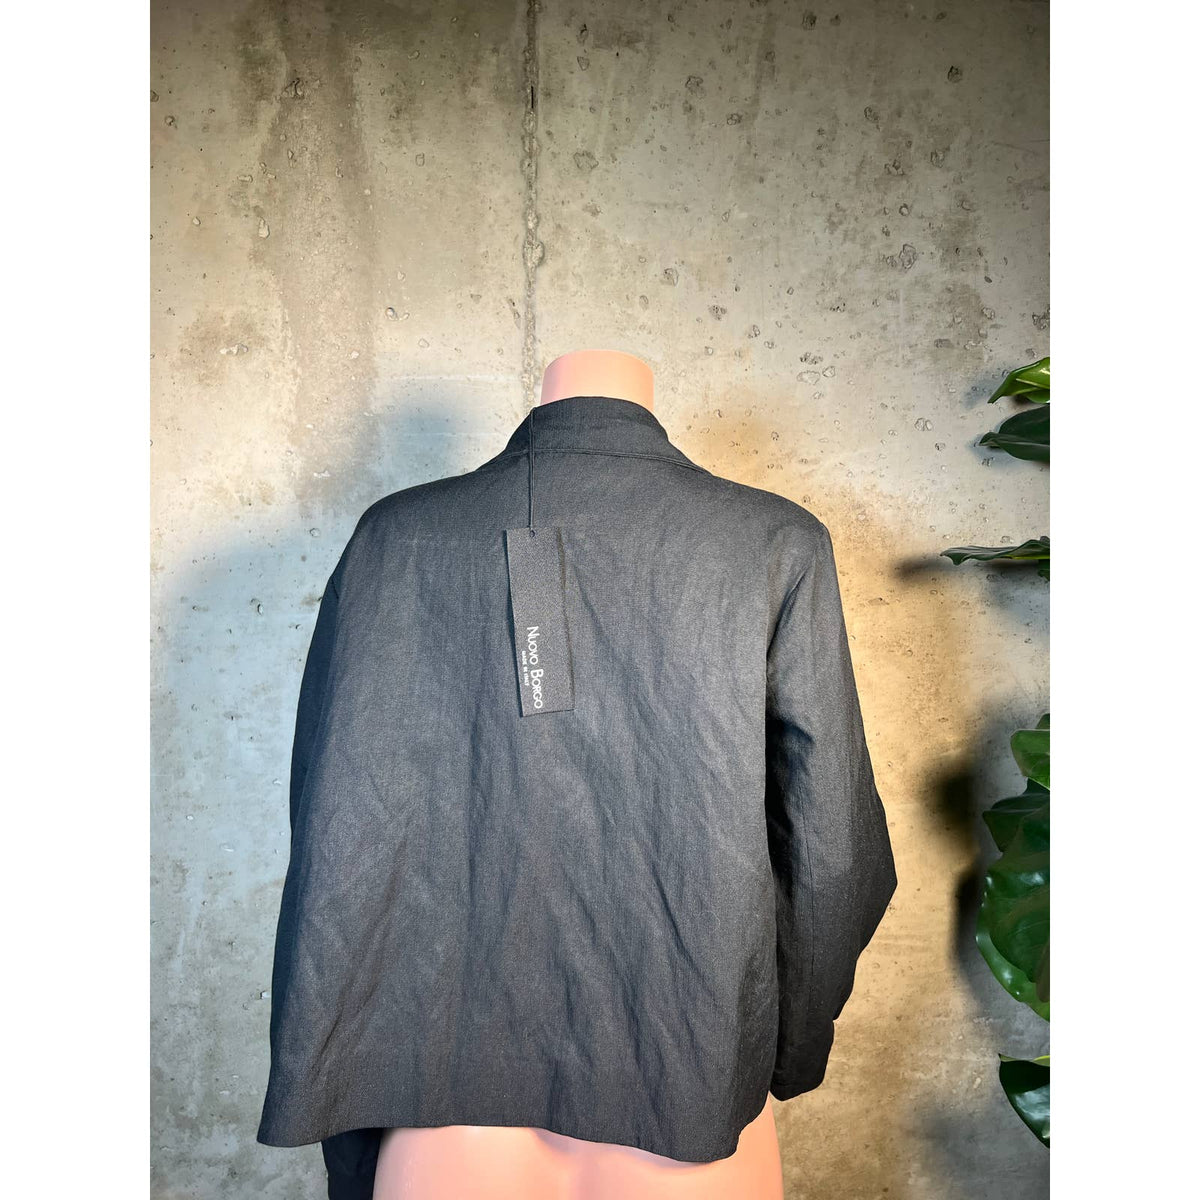 Nuovo Borgo Black Button Ruffle Jacket Sz.XL(50)